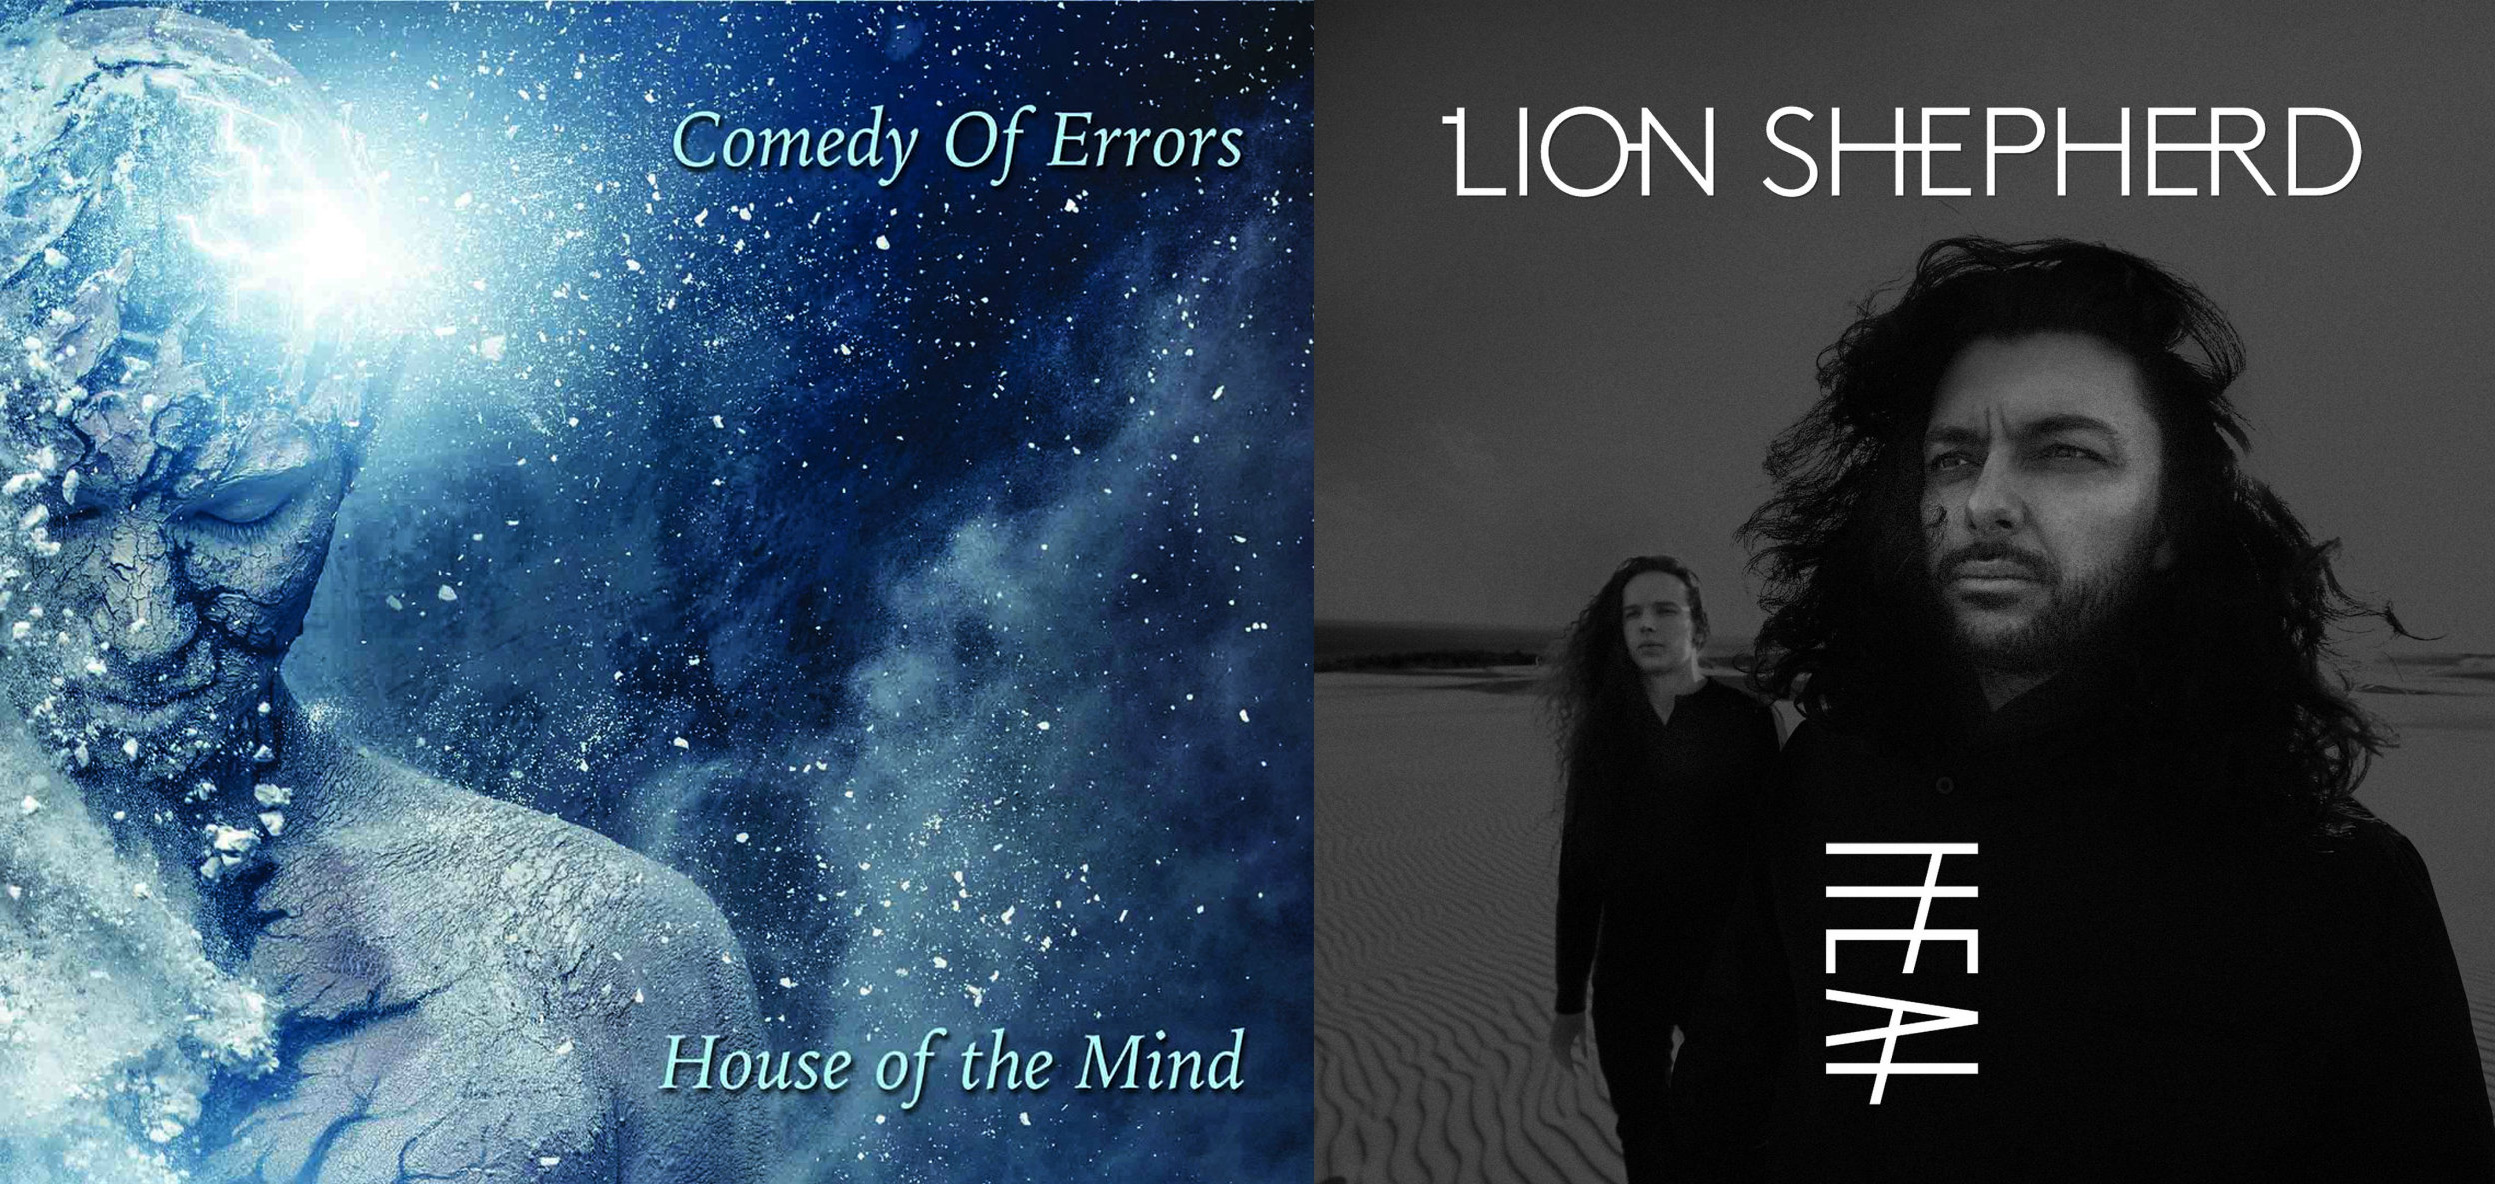 Comedy of Errors, Lion Shepherd